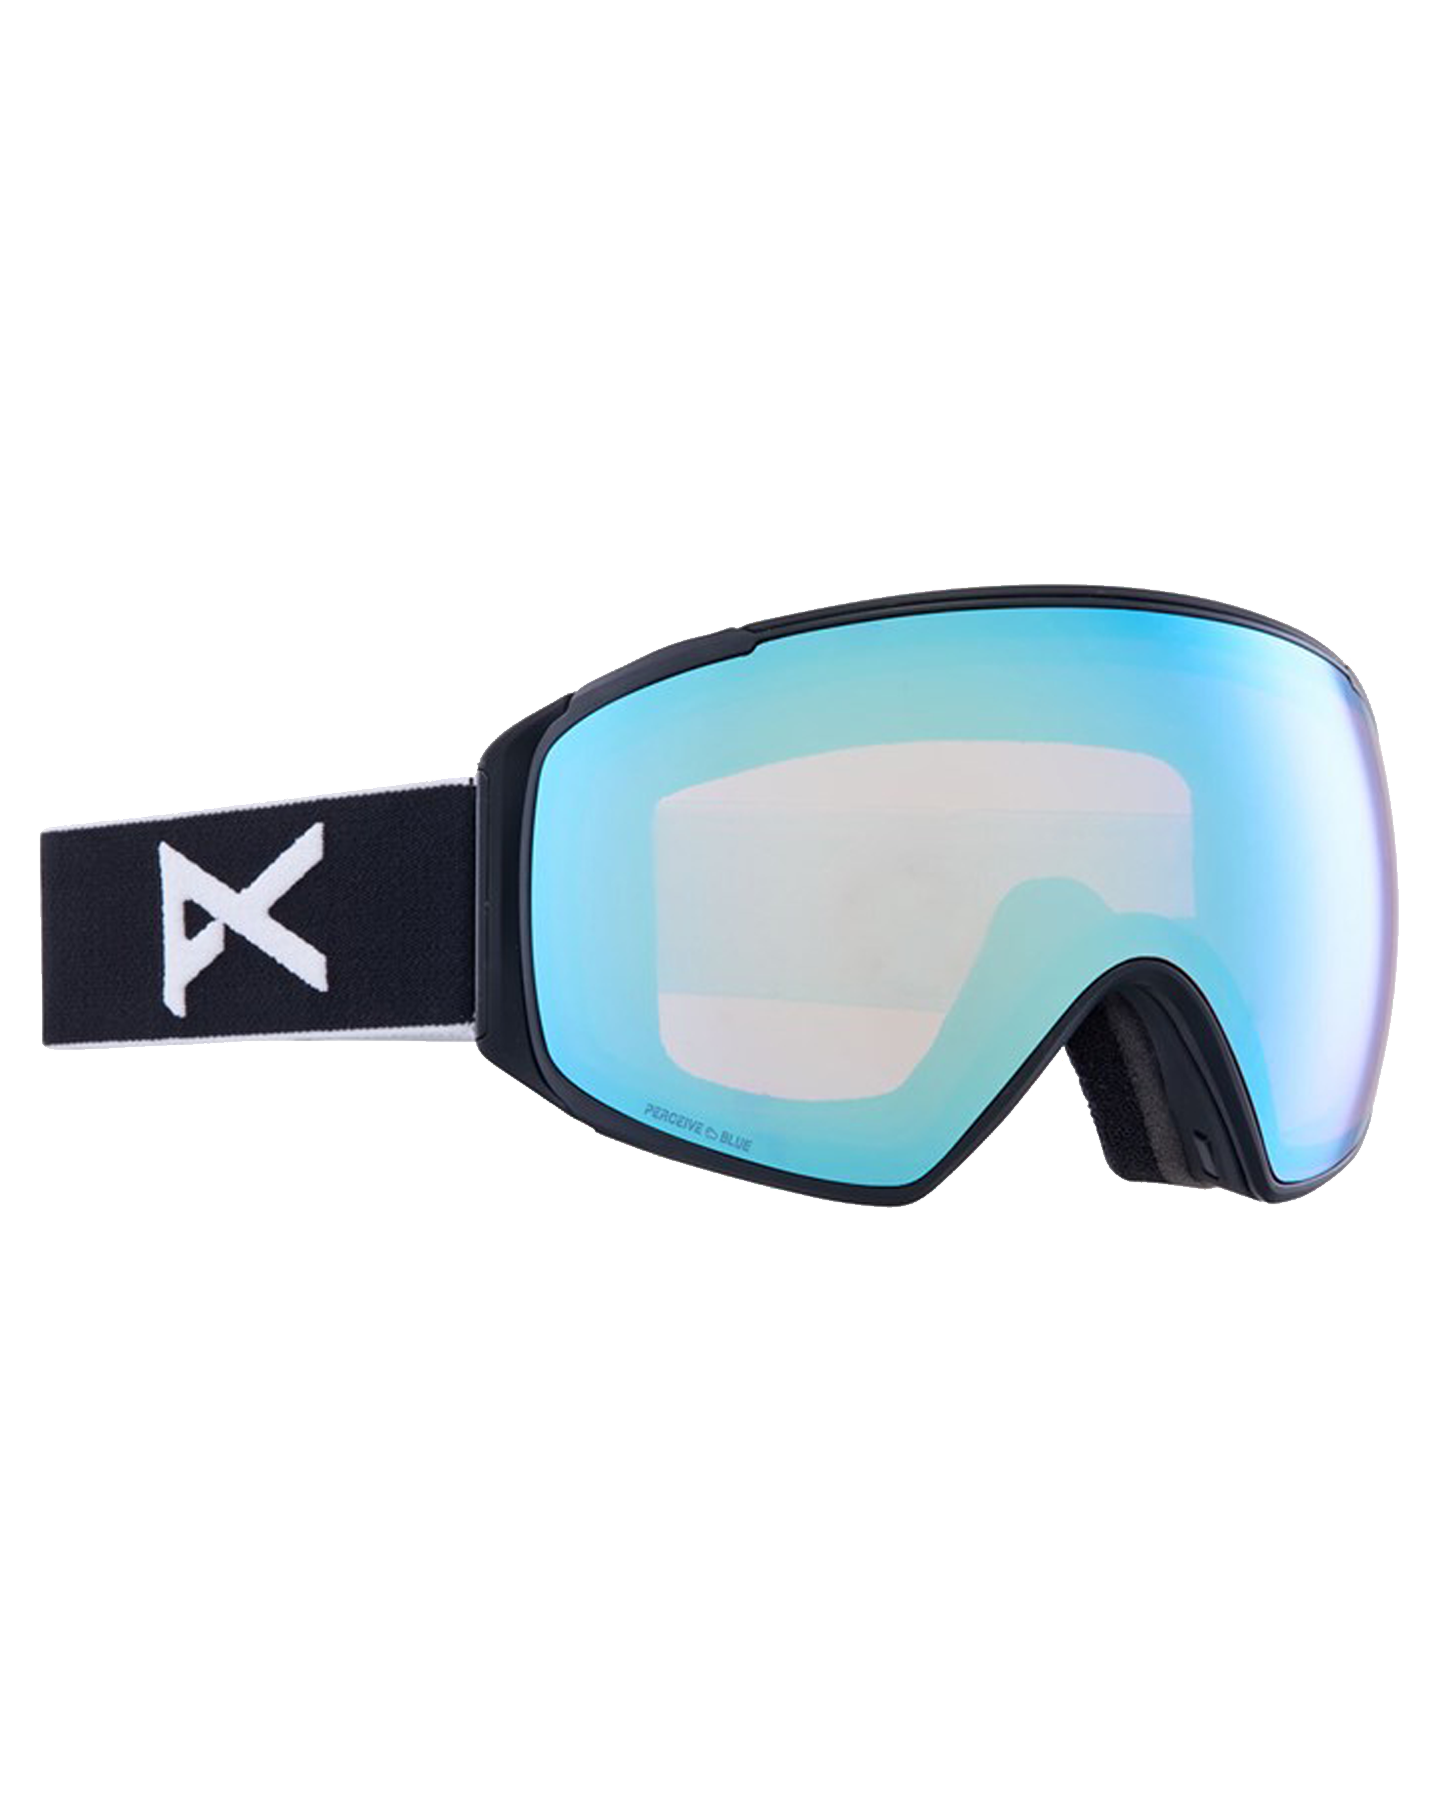 Anon M4 Toric Low Bridge Fit Snow Goggles + Bonus Lens + MFI - Black / Perceive Variable Blue Men's Snow Goggles - SnowSkiersWarehouse